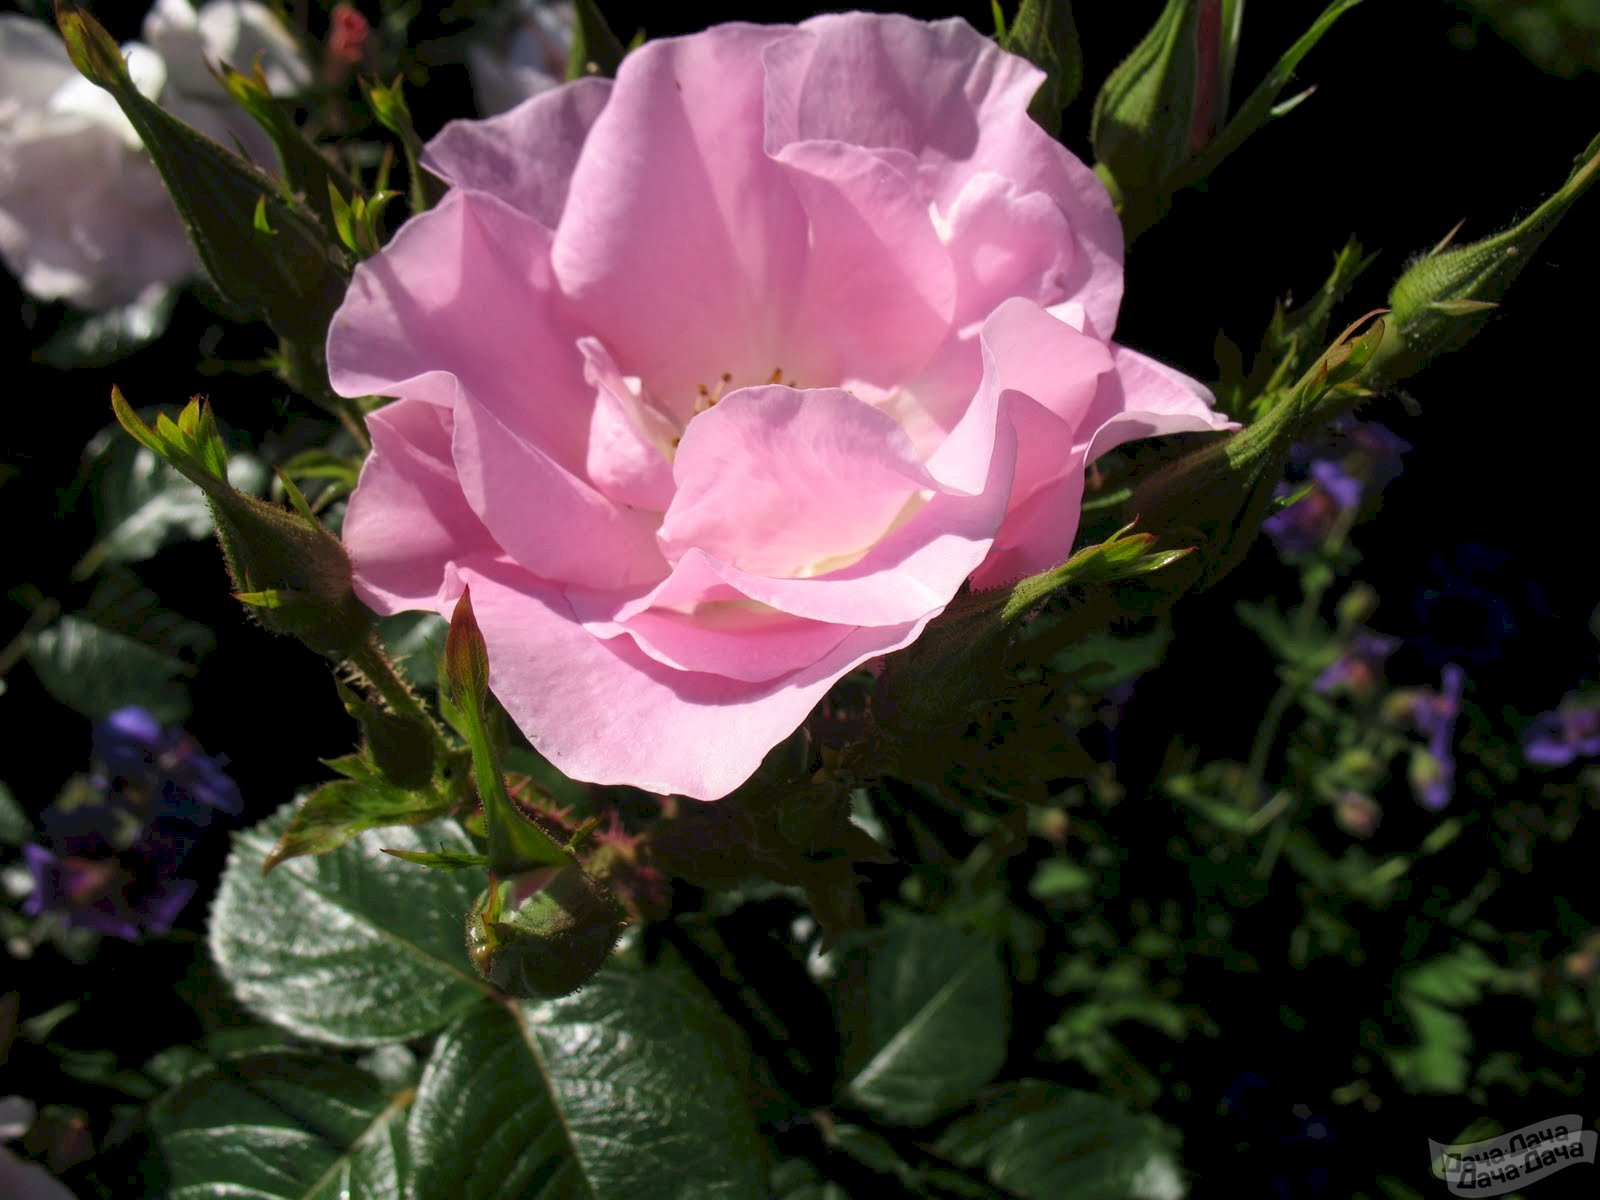 Pink robusta роза